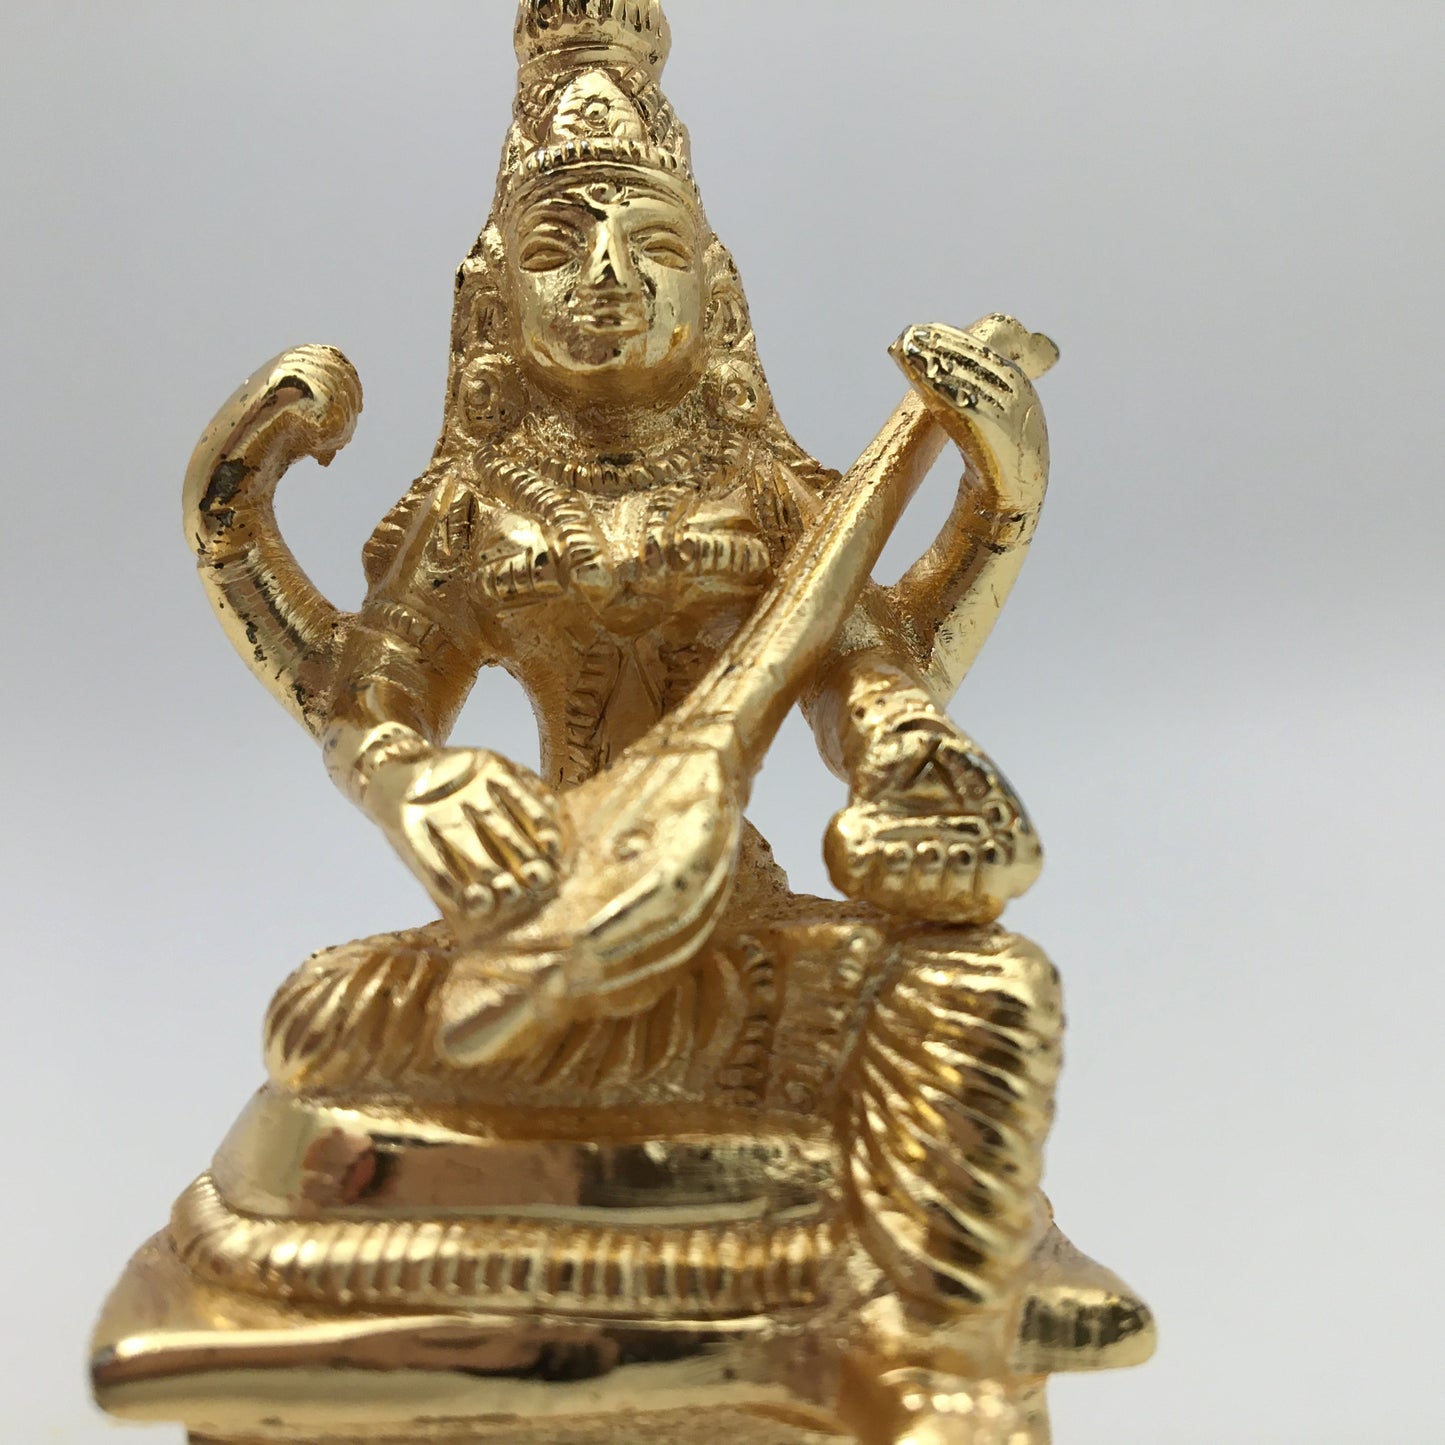 Gold-Plated Saraswati Divine Mother Statue Hindu Goddess with Veena-Handcrafted